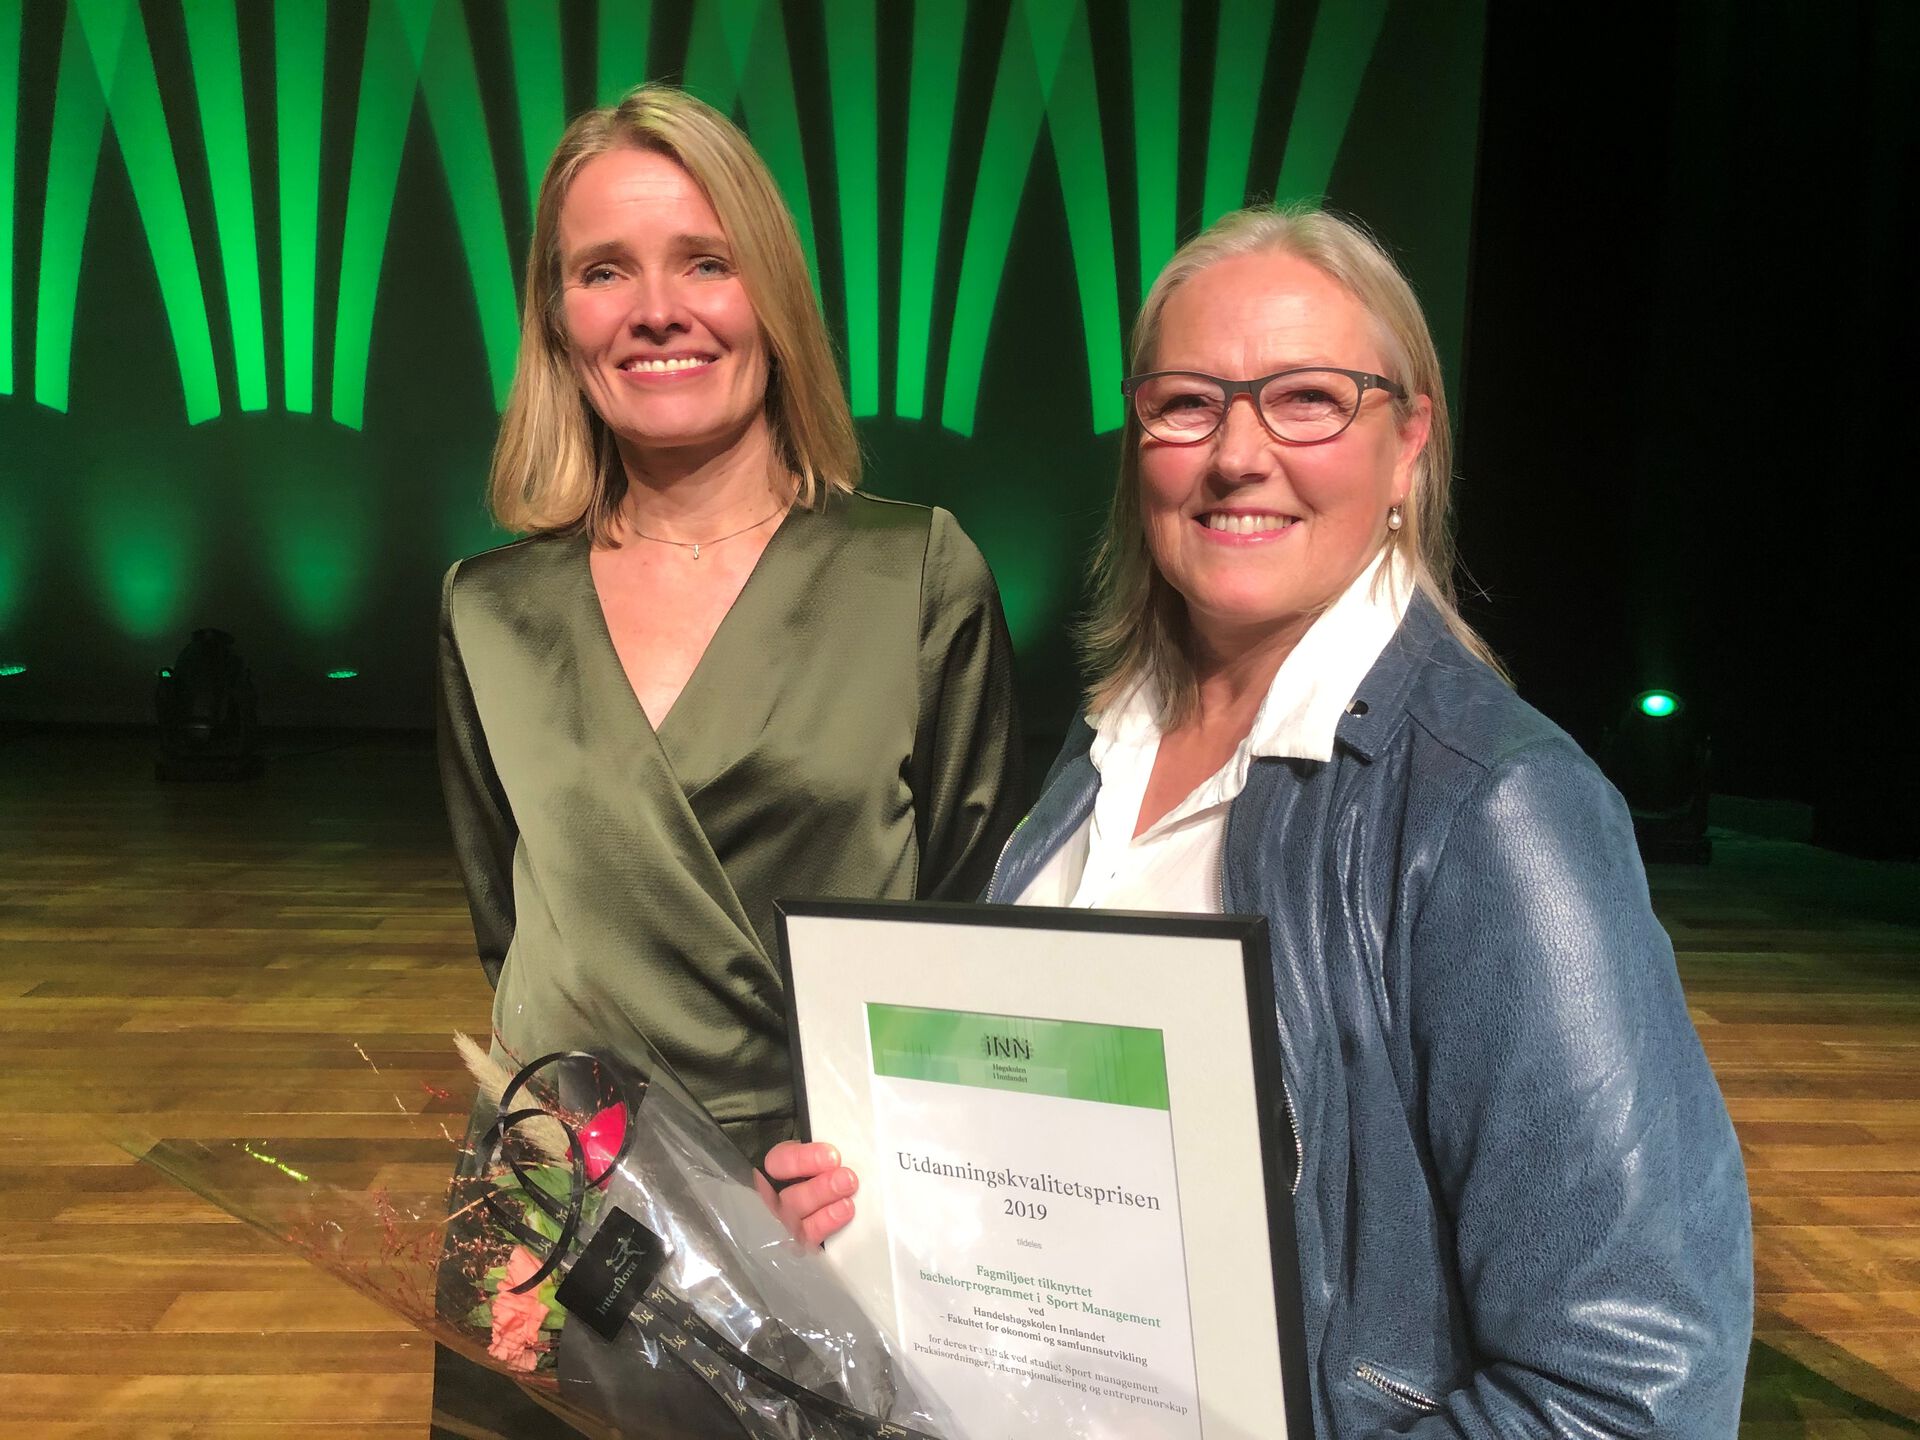 Prorektor utdanning Stine Grønvold overrekker blomster og diplom til førstelektor Trine Løvold Syversen i anledning HINNs Utdanningskvalitetspris for 2019.